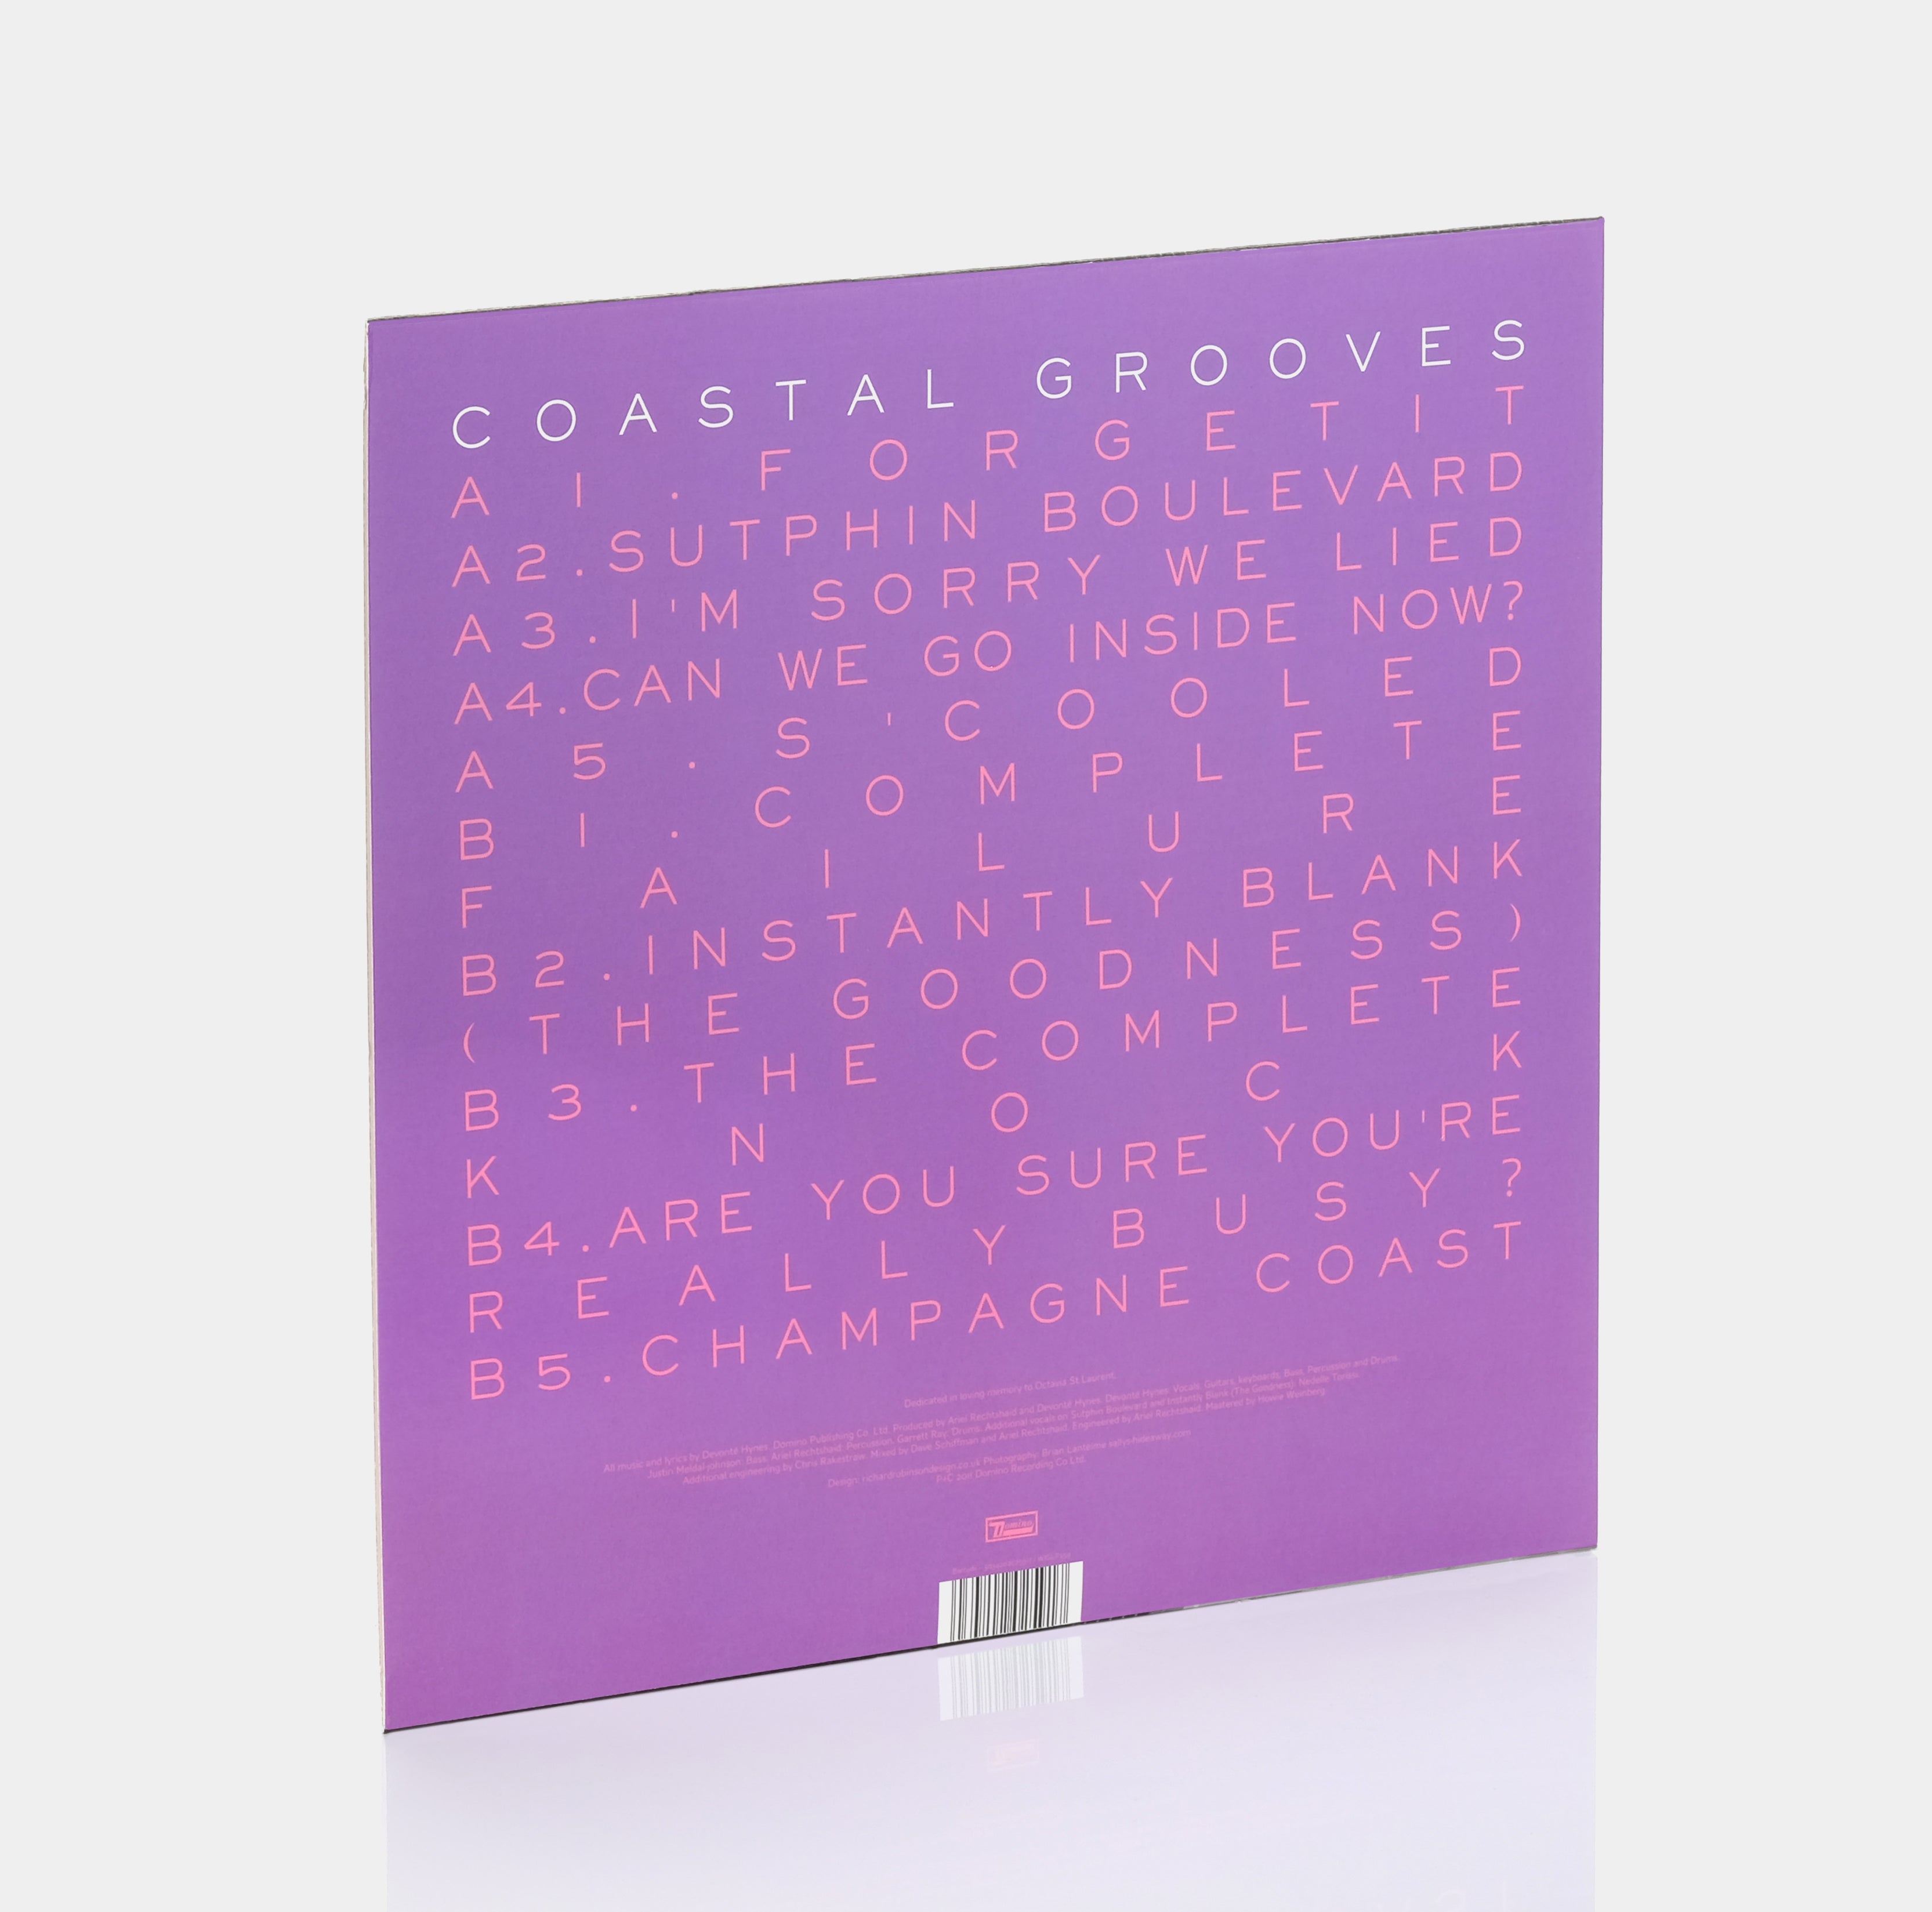 Blood Orange - Coastal Grooves LP Vinyl Record